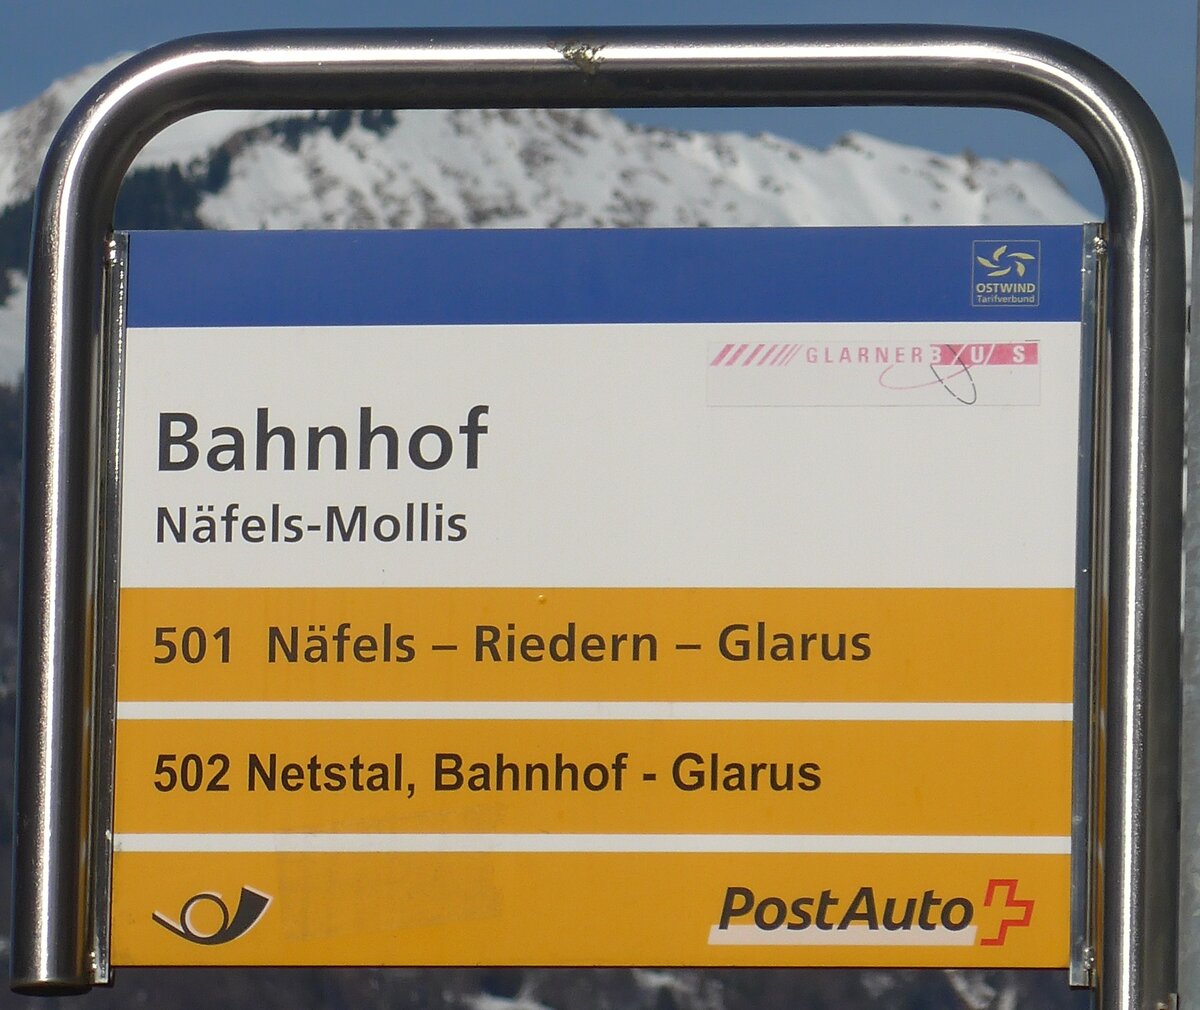 (214'203) - PostAuto/GLARNER BUS-Haltestellenschild - Nfels-Mollis, Bahnhof - am 15. Februar 2020